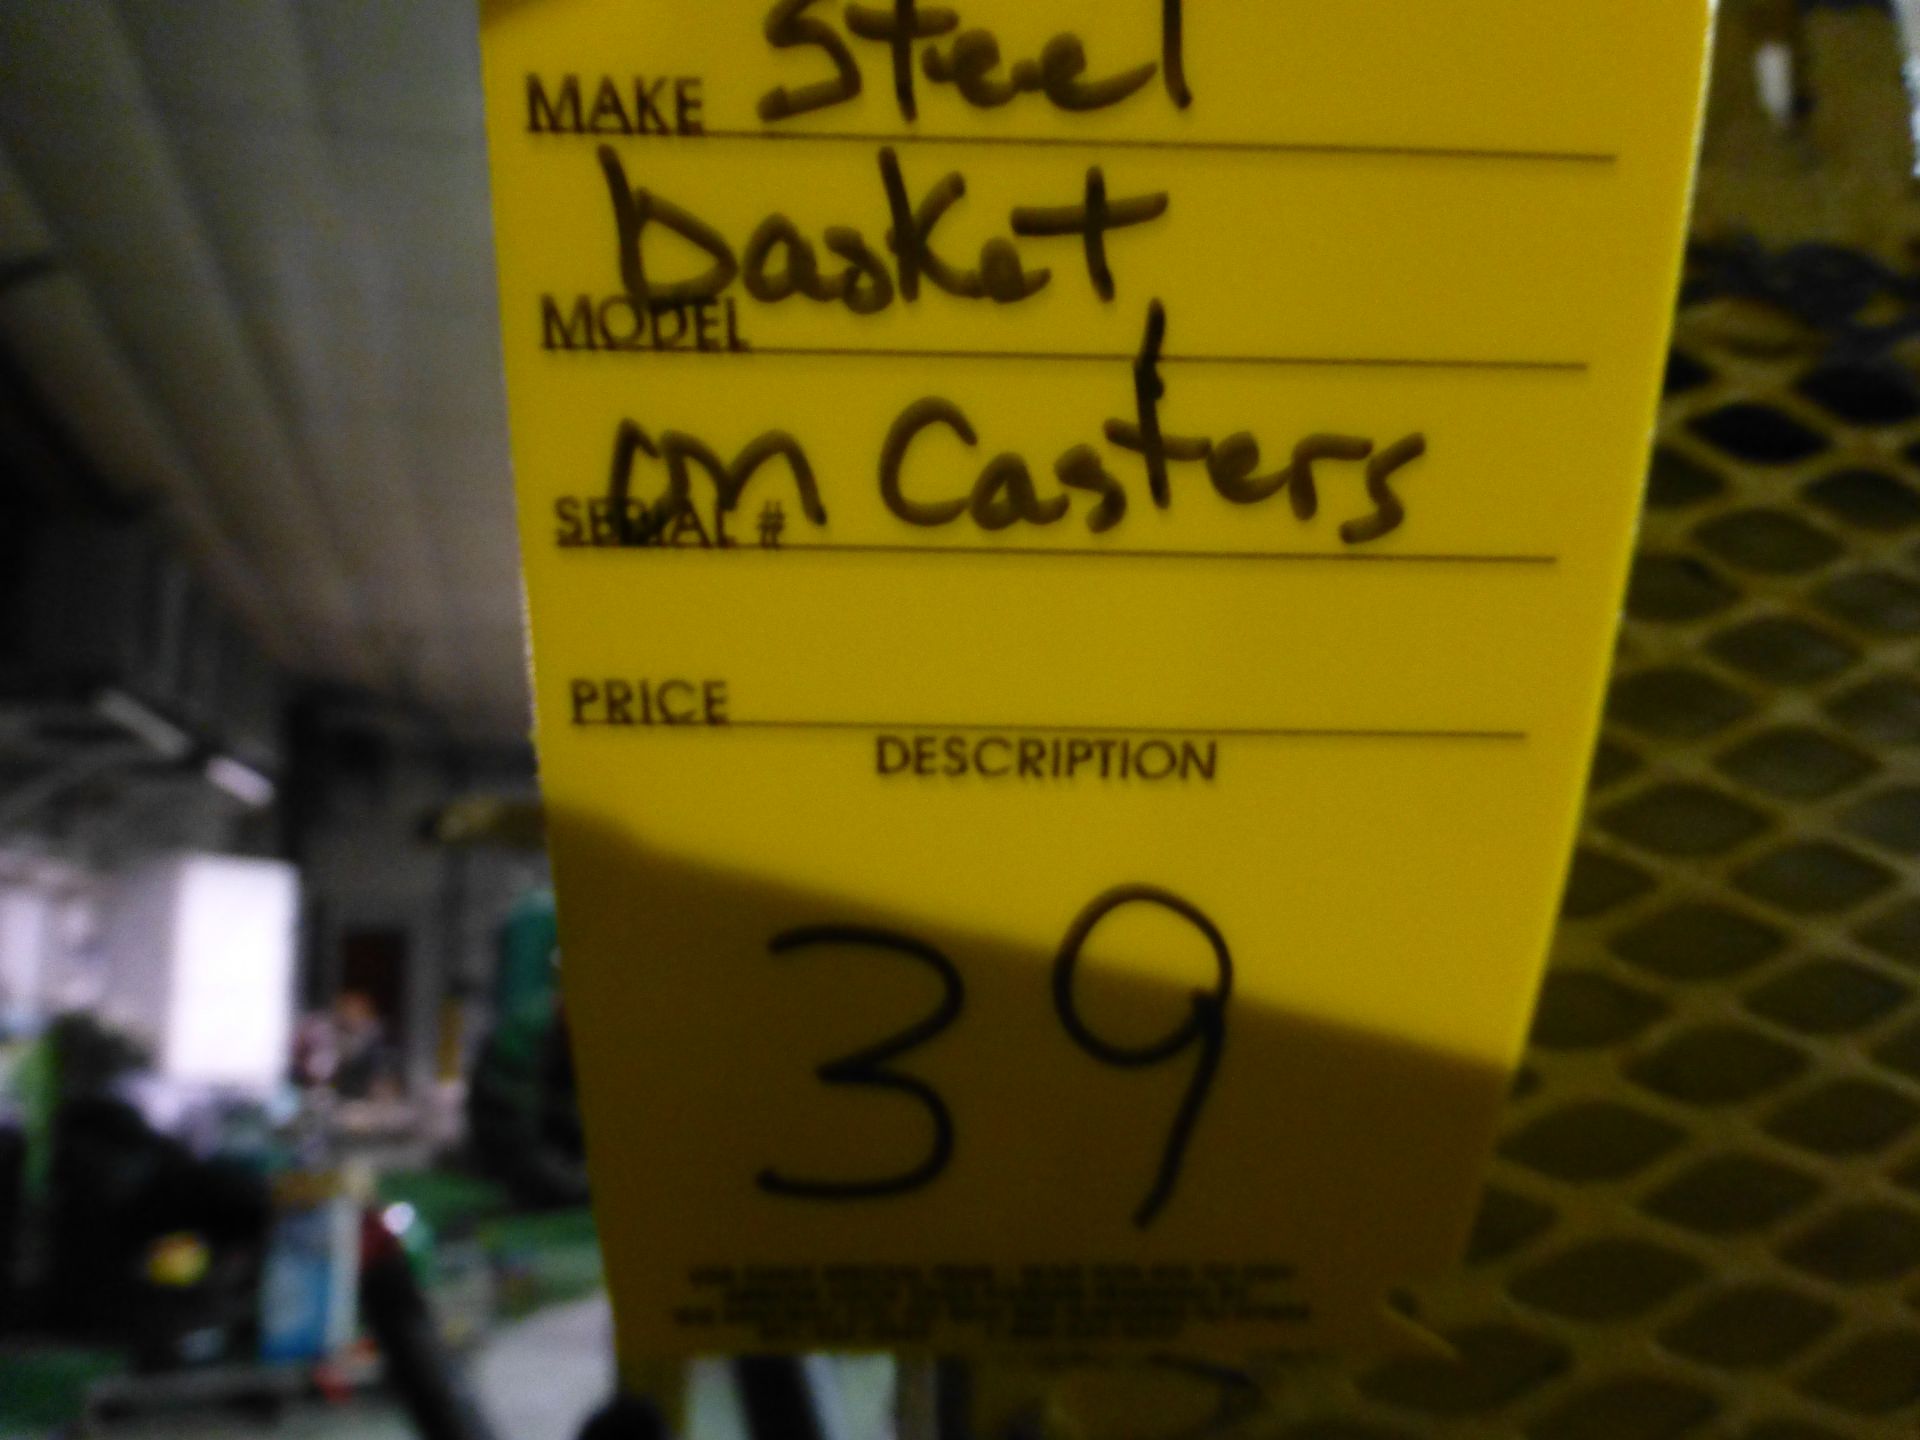 Steel Basket on casters - Image 3 of 3